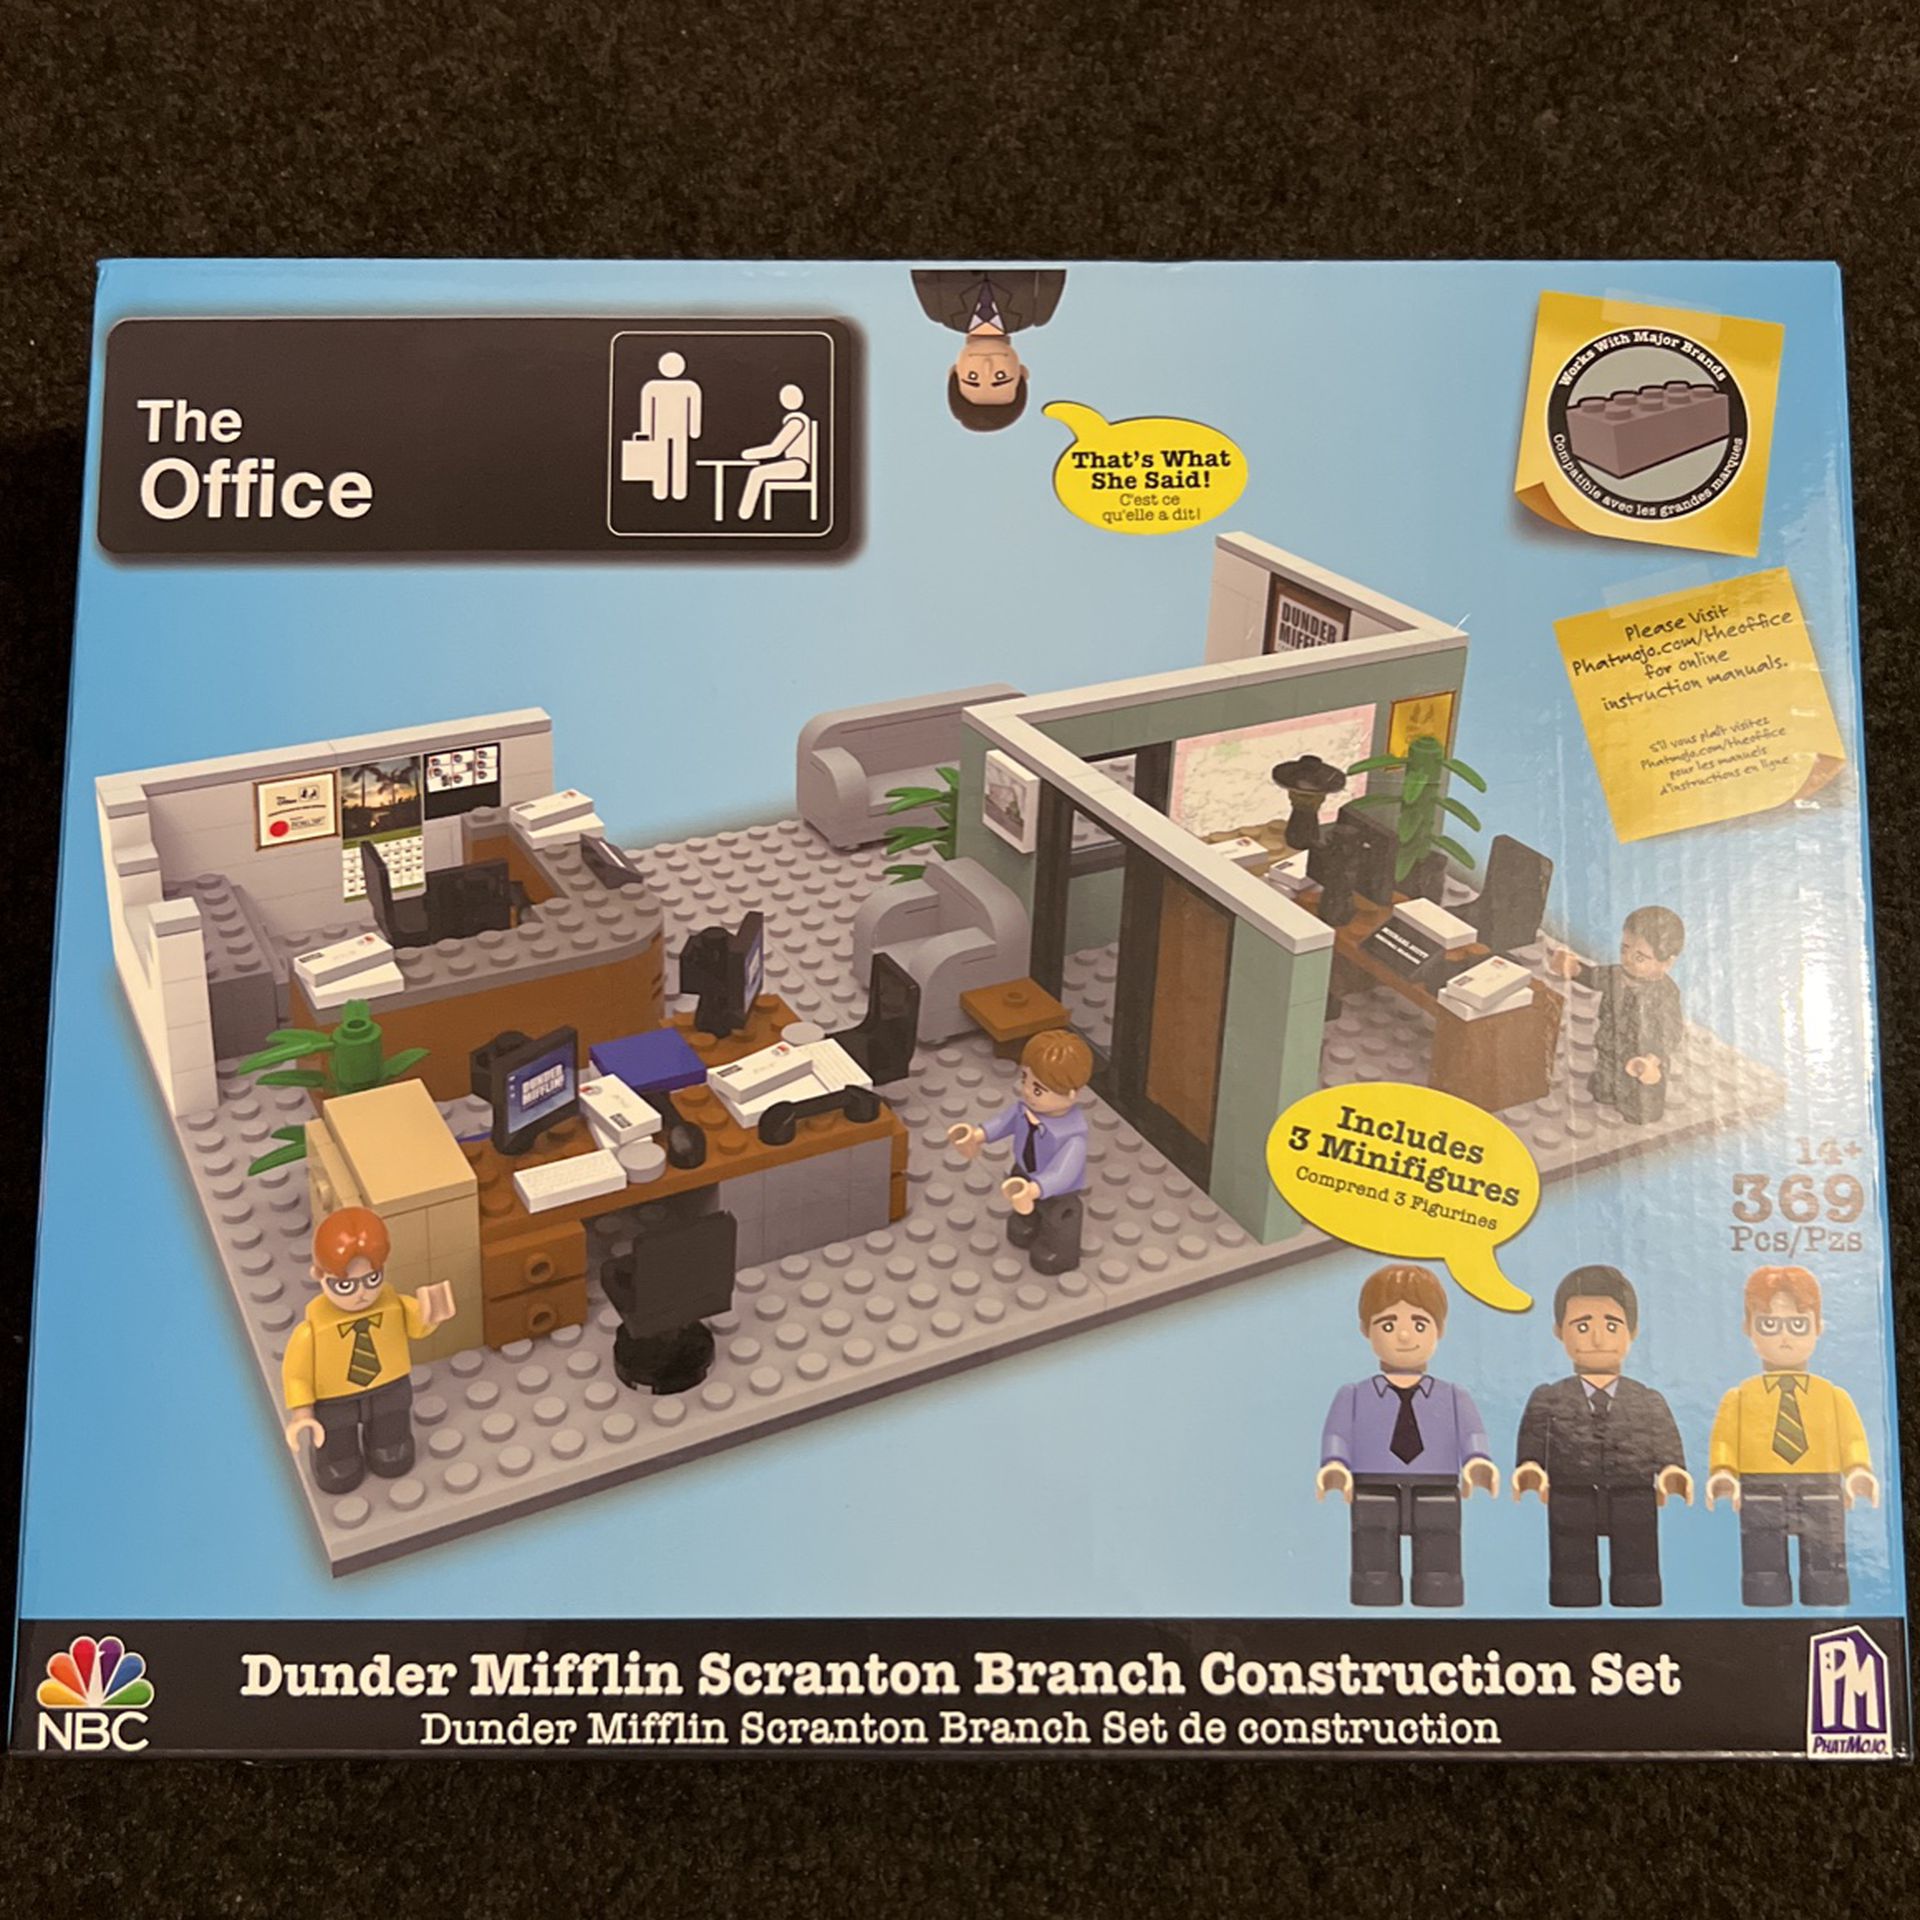 The Office Dunder Mifflin Scranton Branch Construction Set (369